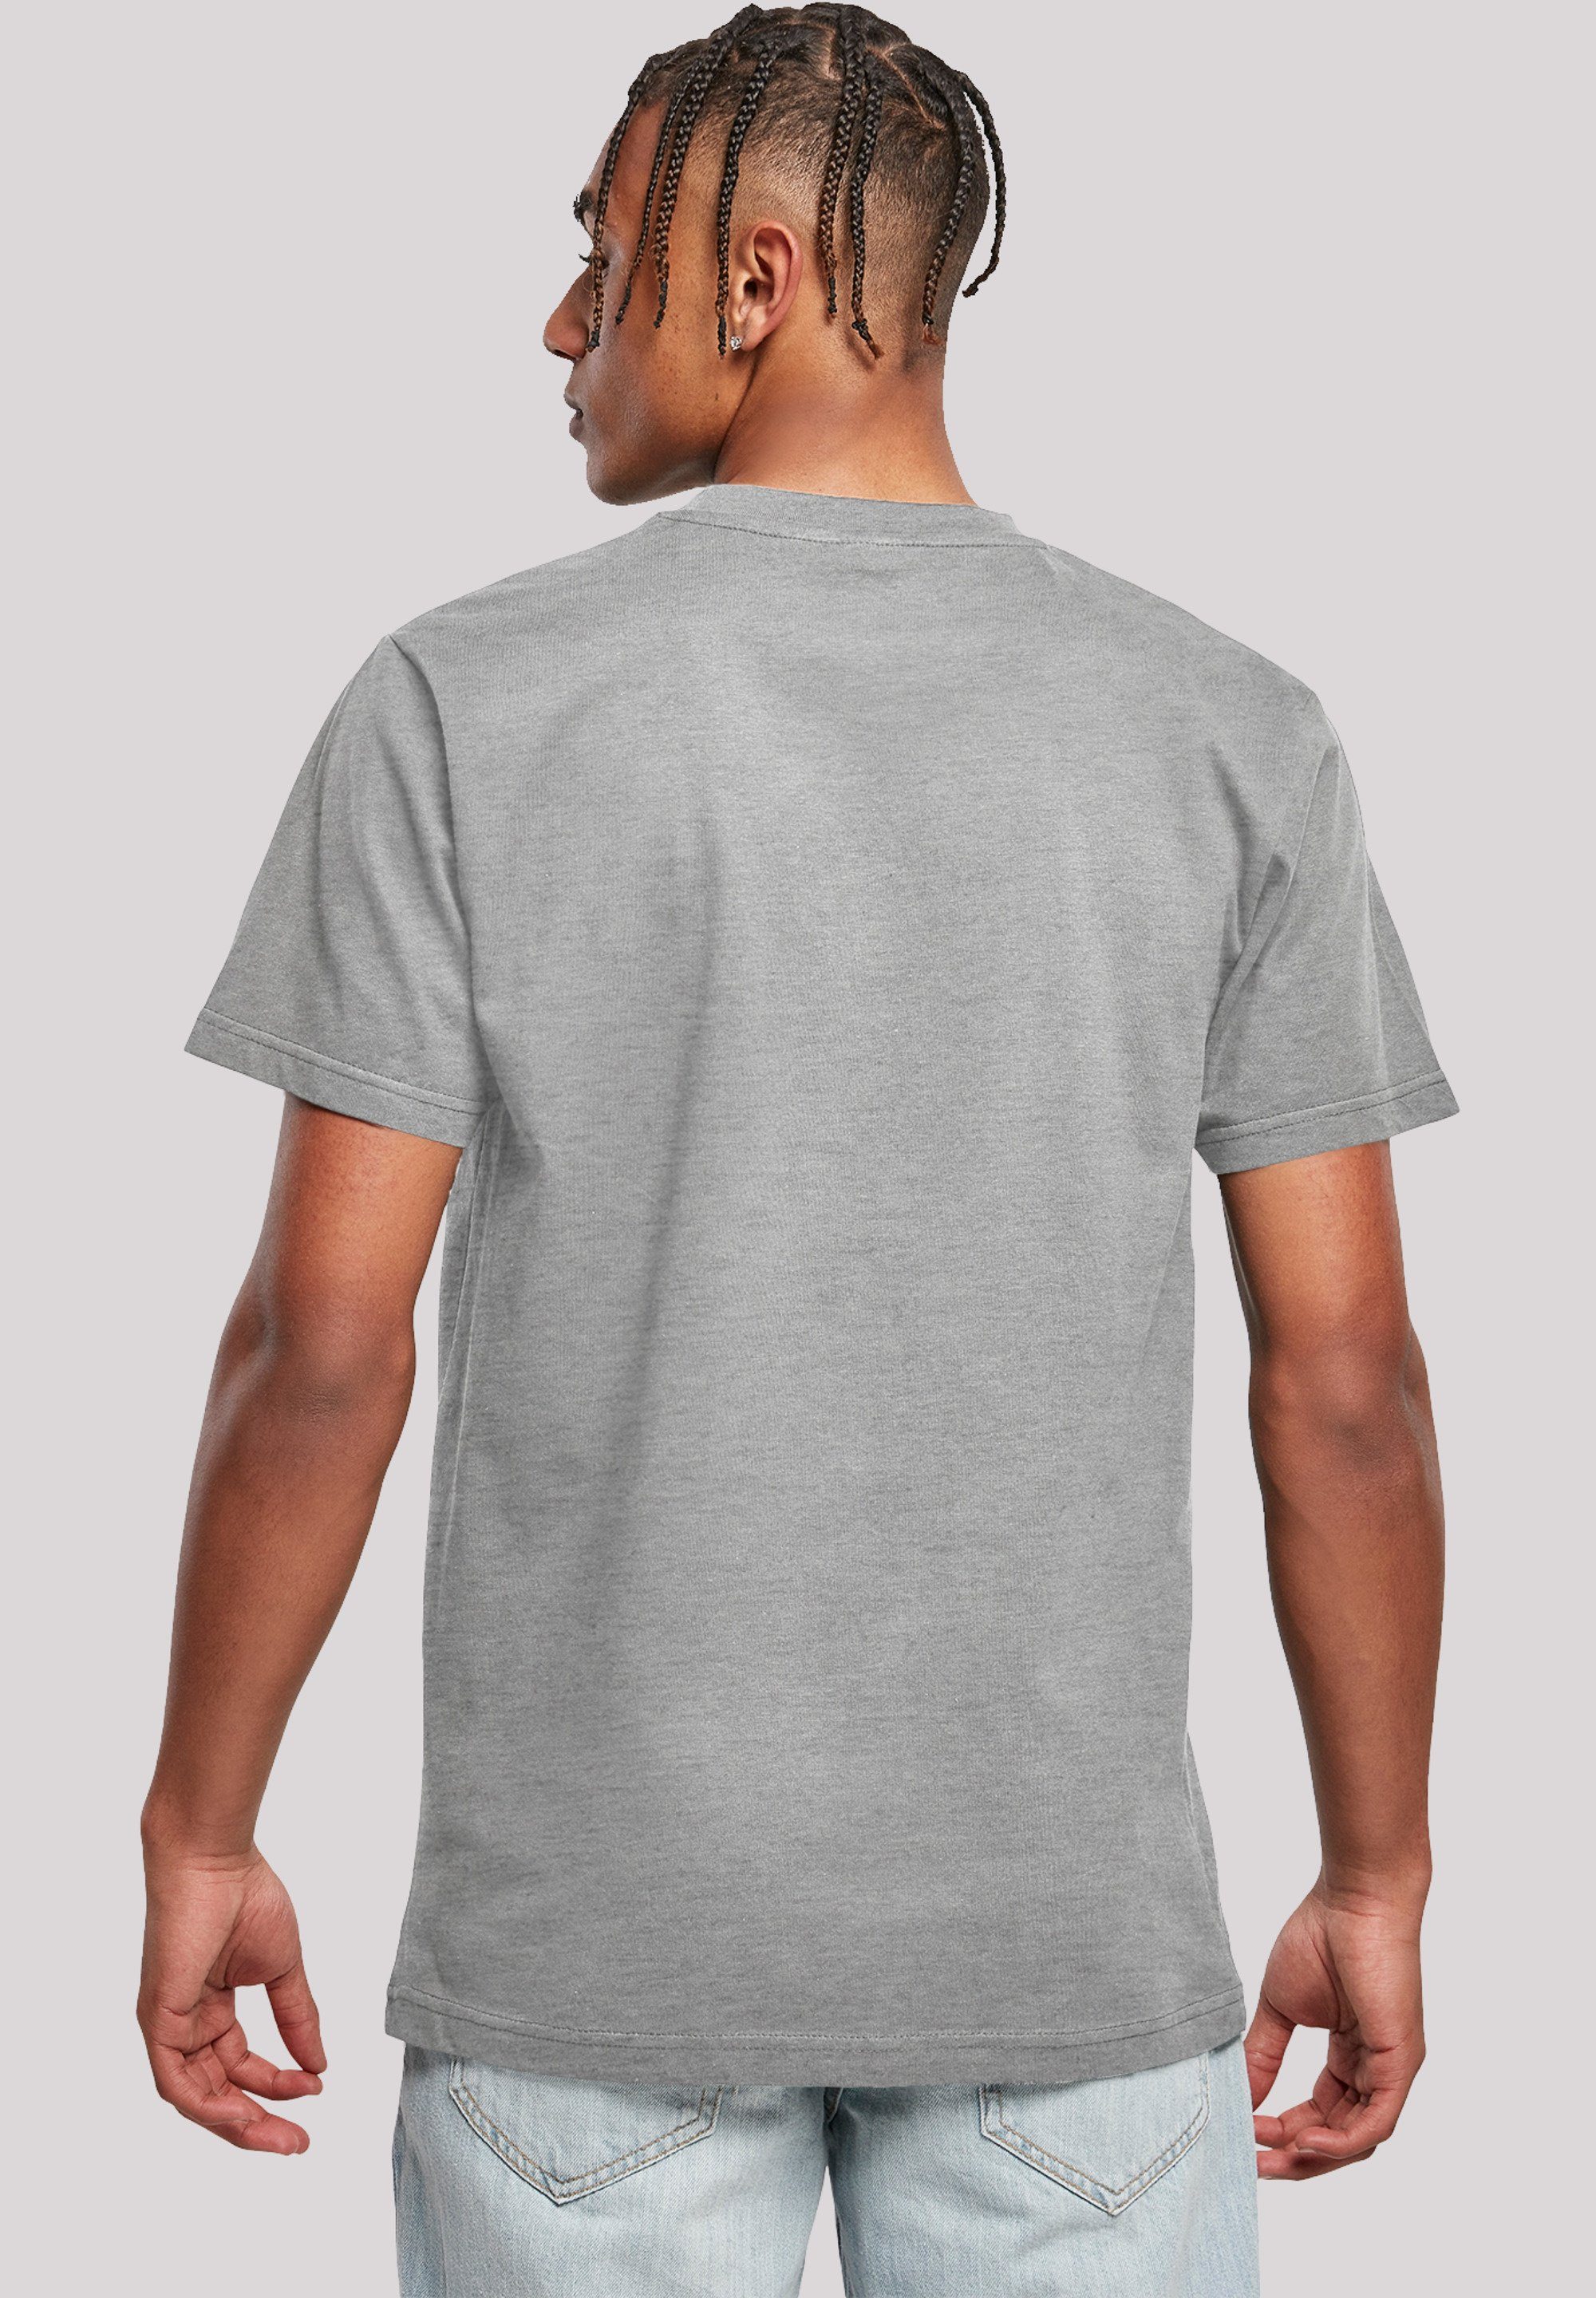 Slay F4NT4STIC grey heather T-Shirt slang 2022, Jugendwort